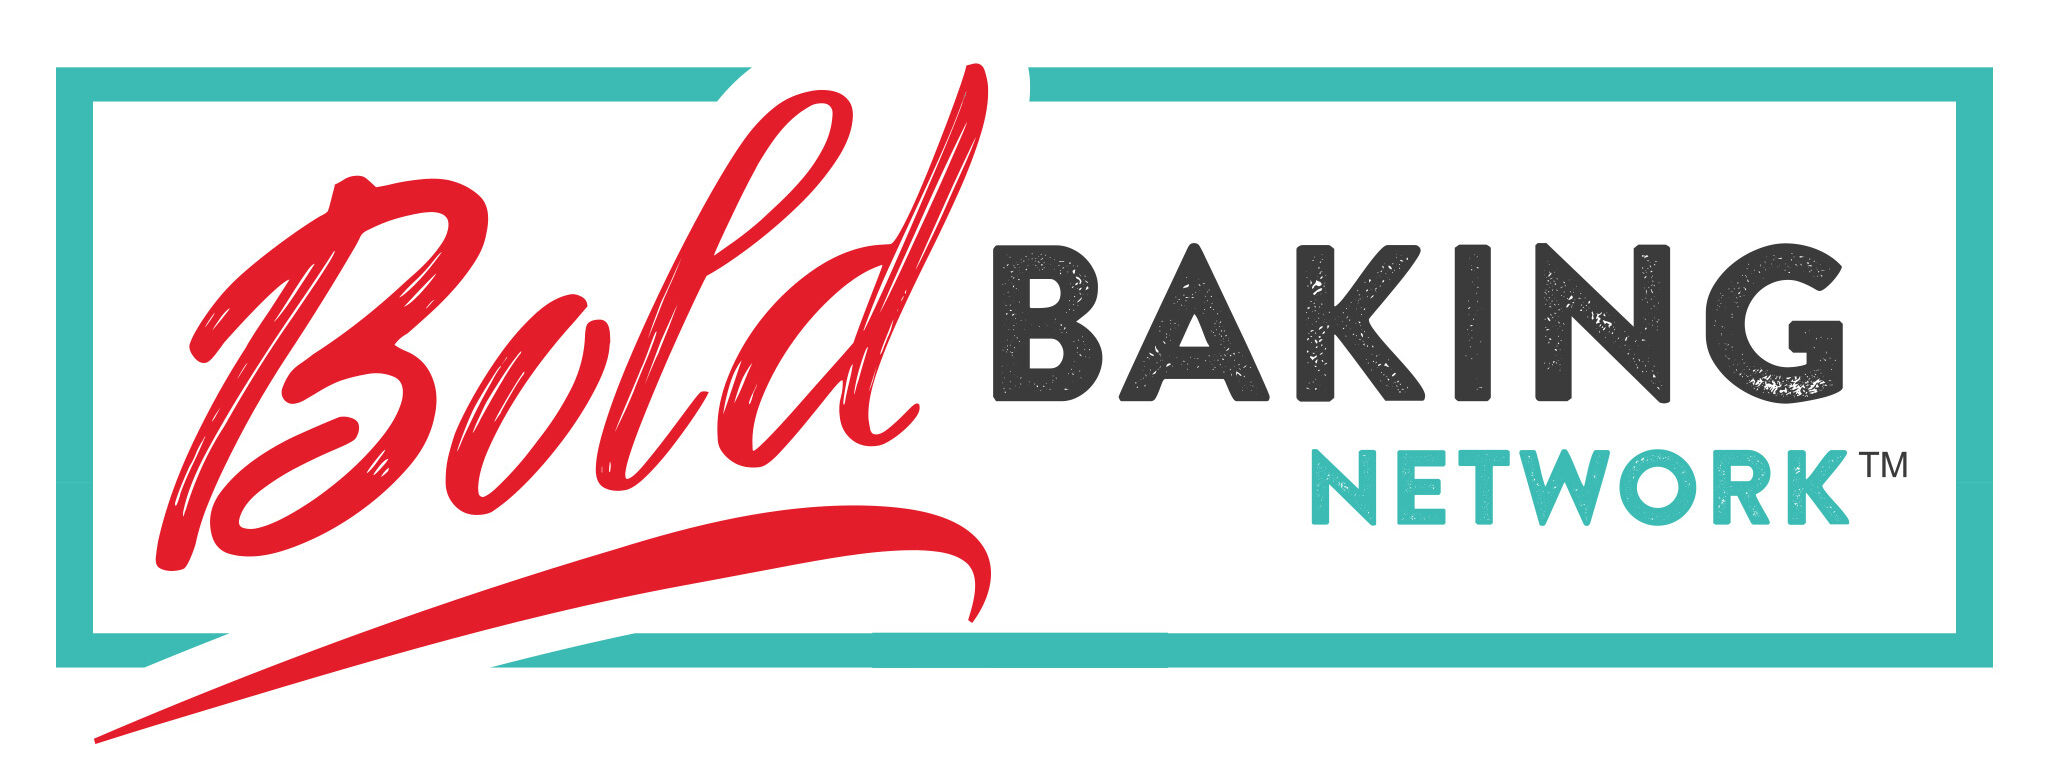 The Bold Baking Network Logo